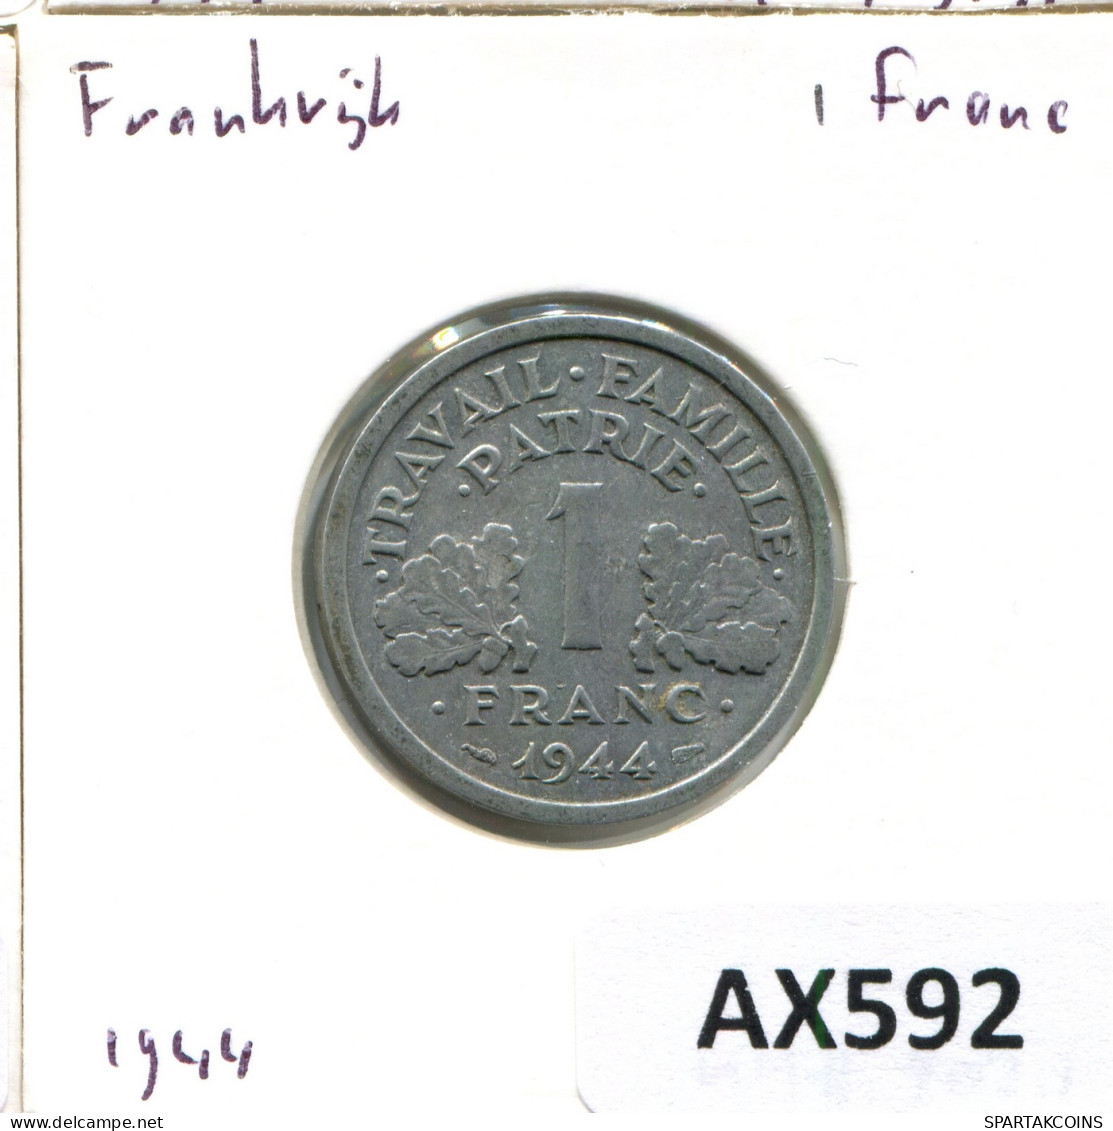 1 FRANC 1944 FRANCE Coin #AX592 - 1 Franc